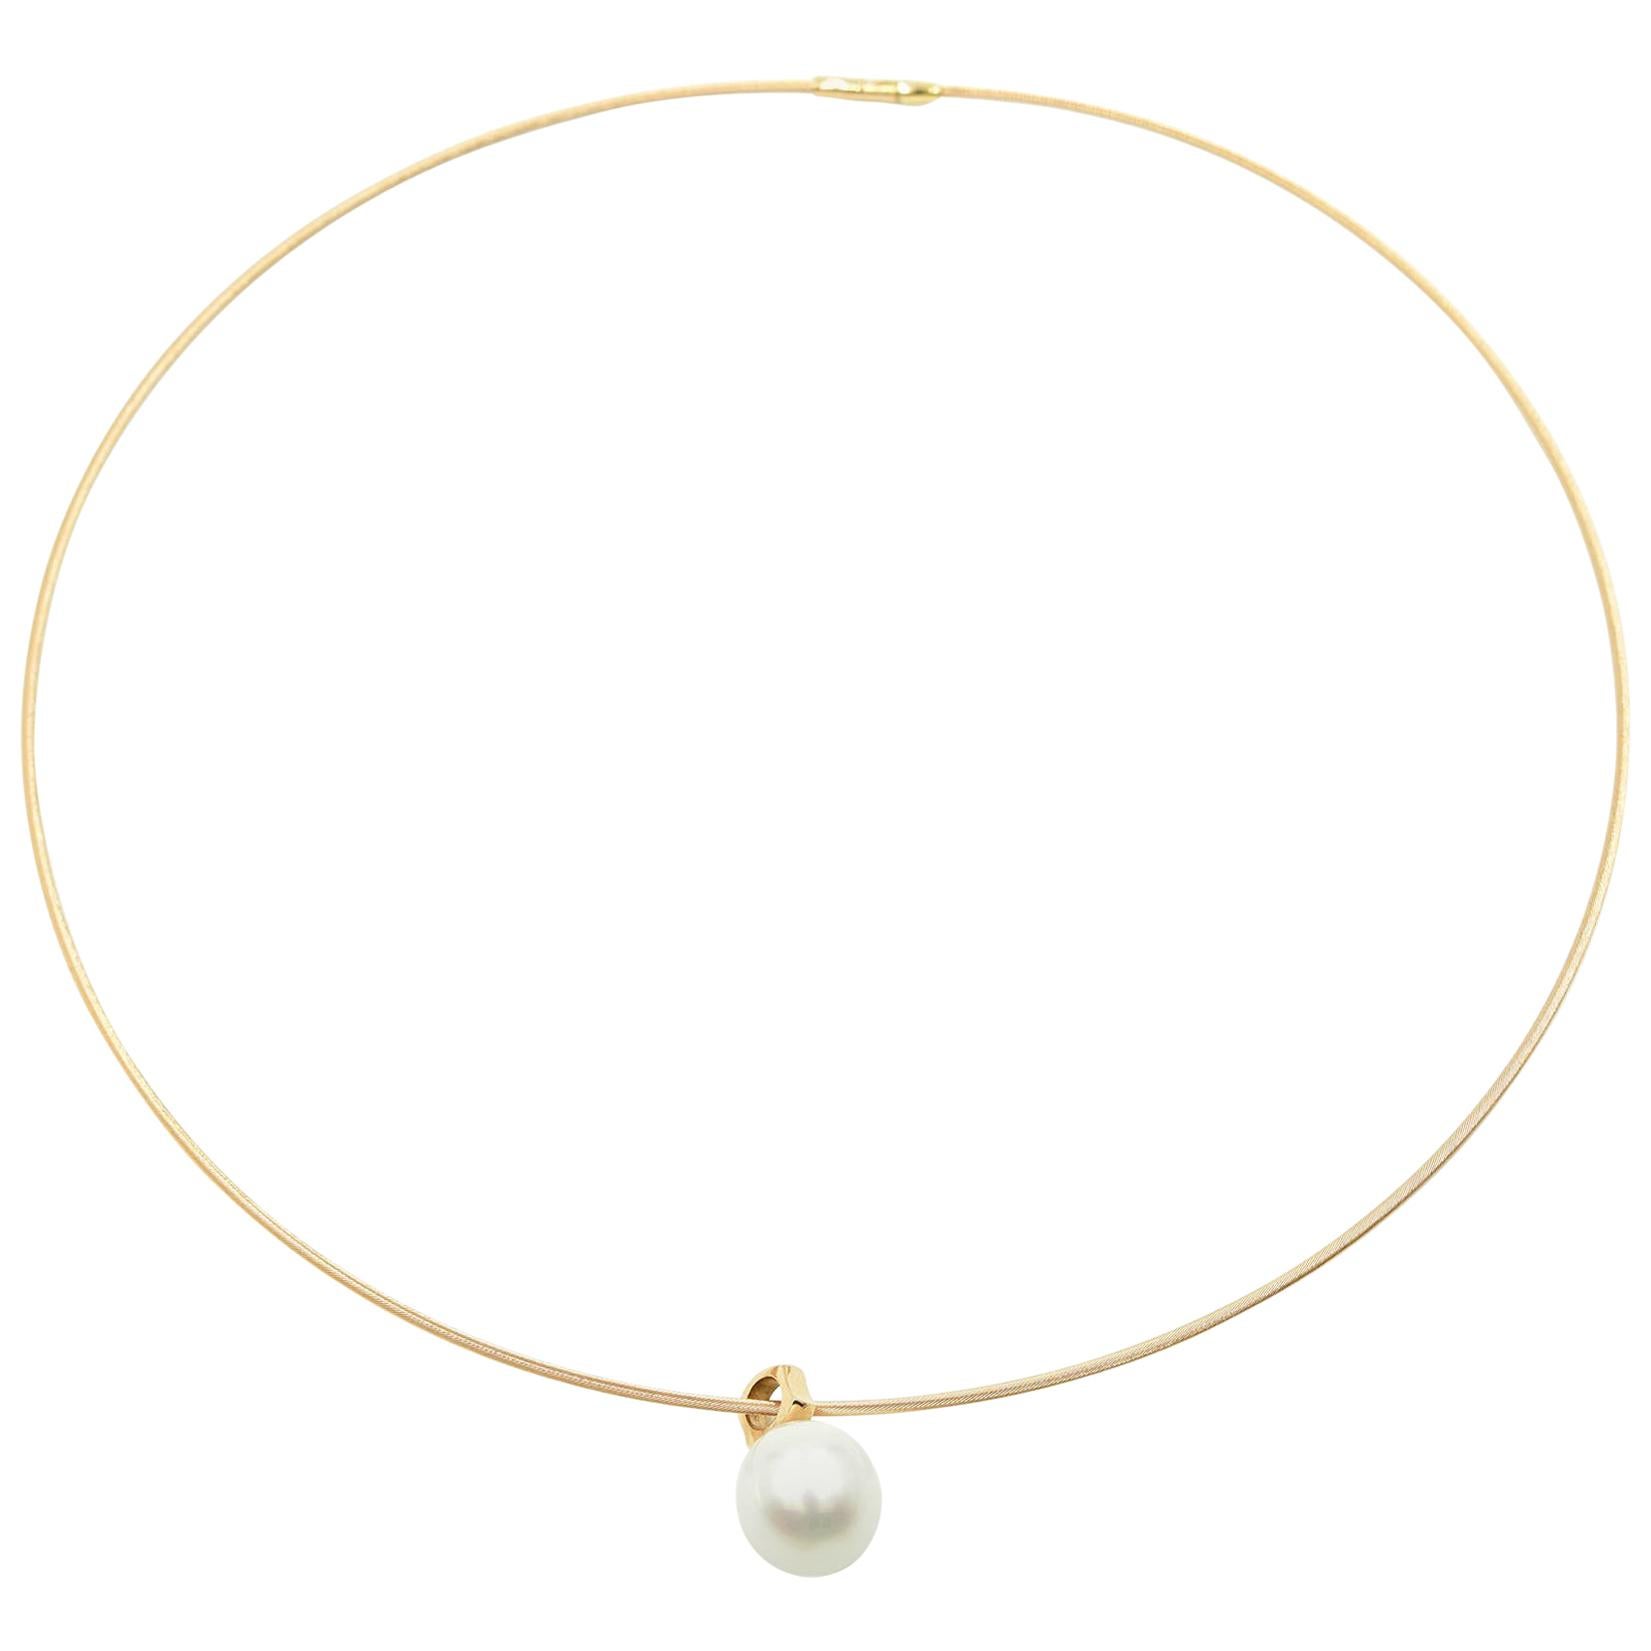 South Sea Pearl Sliding Bail Pendant on 18 Karat Rose Gold Collar Necklace